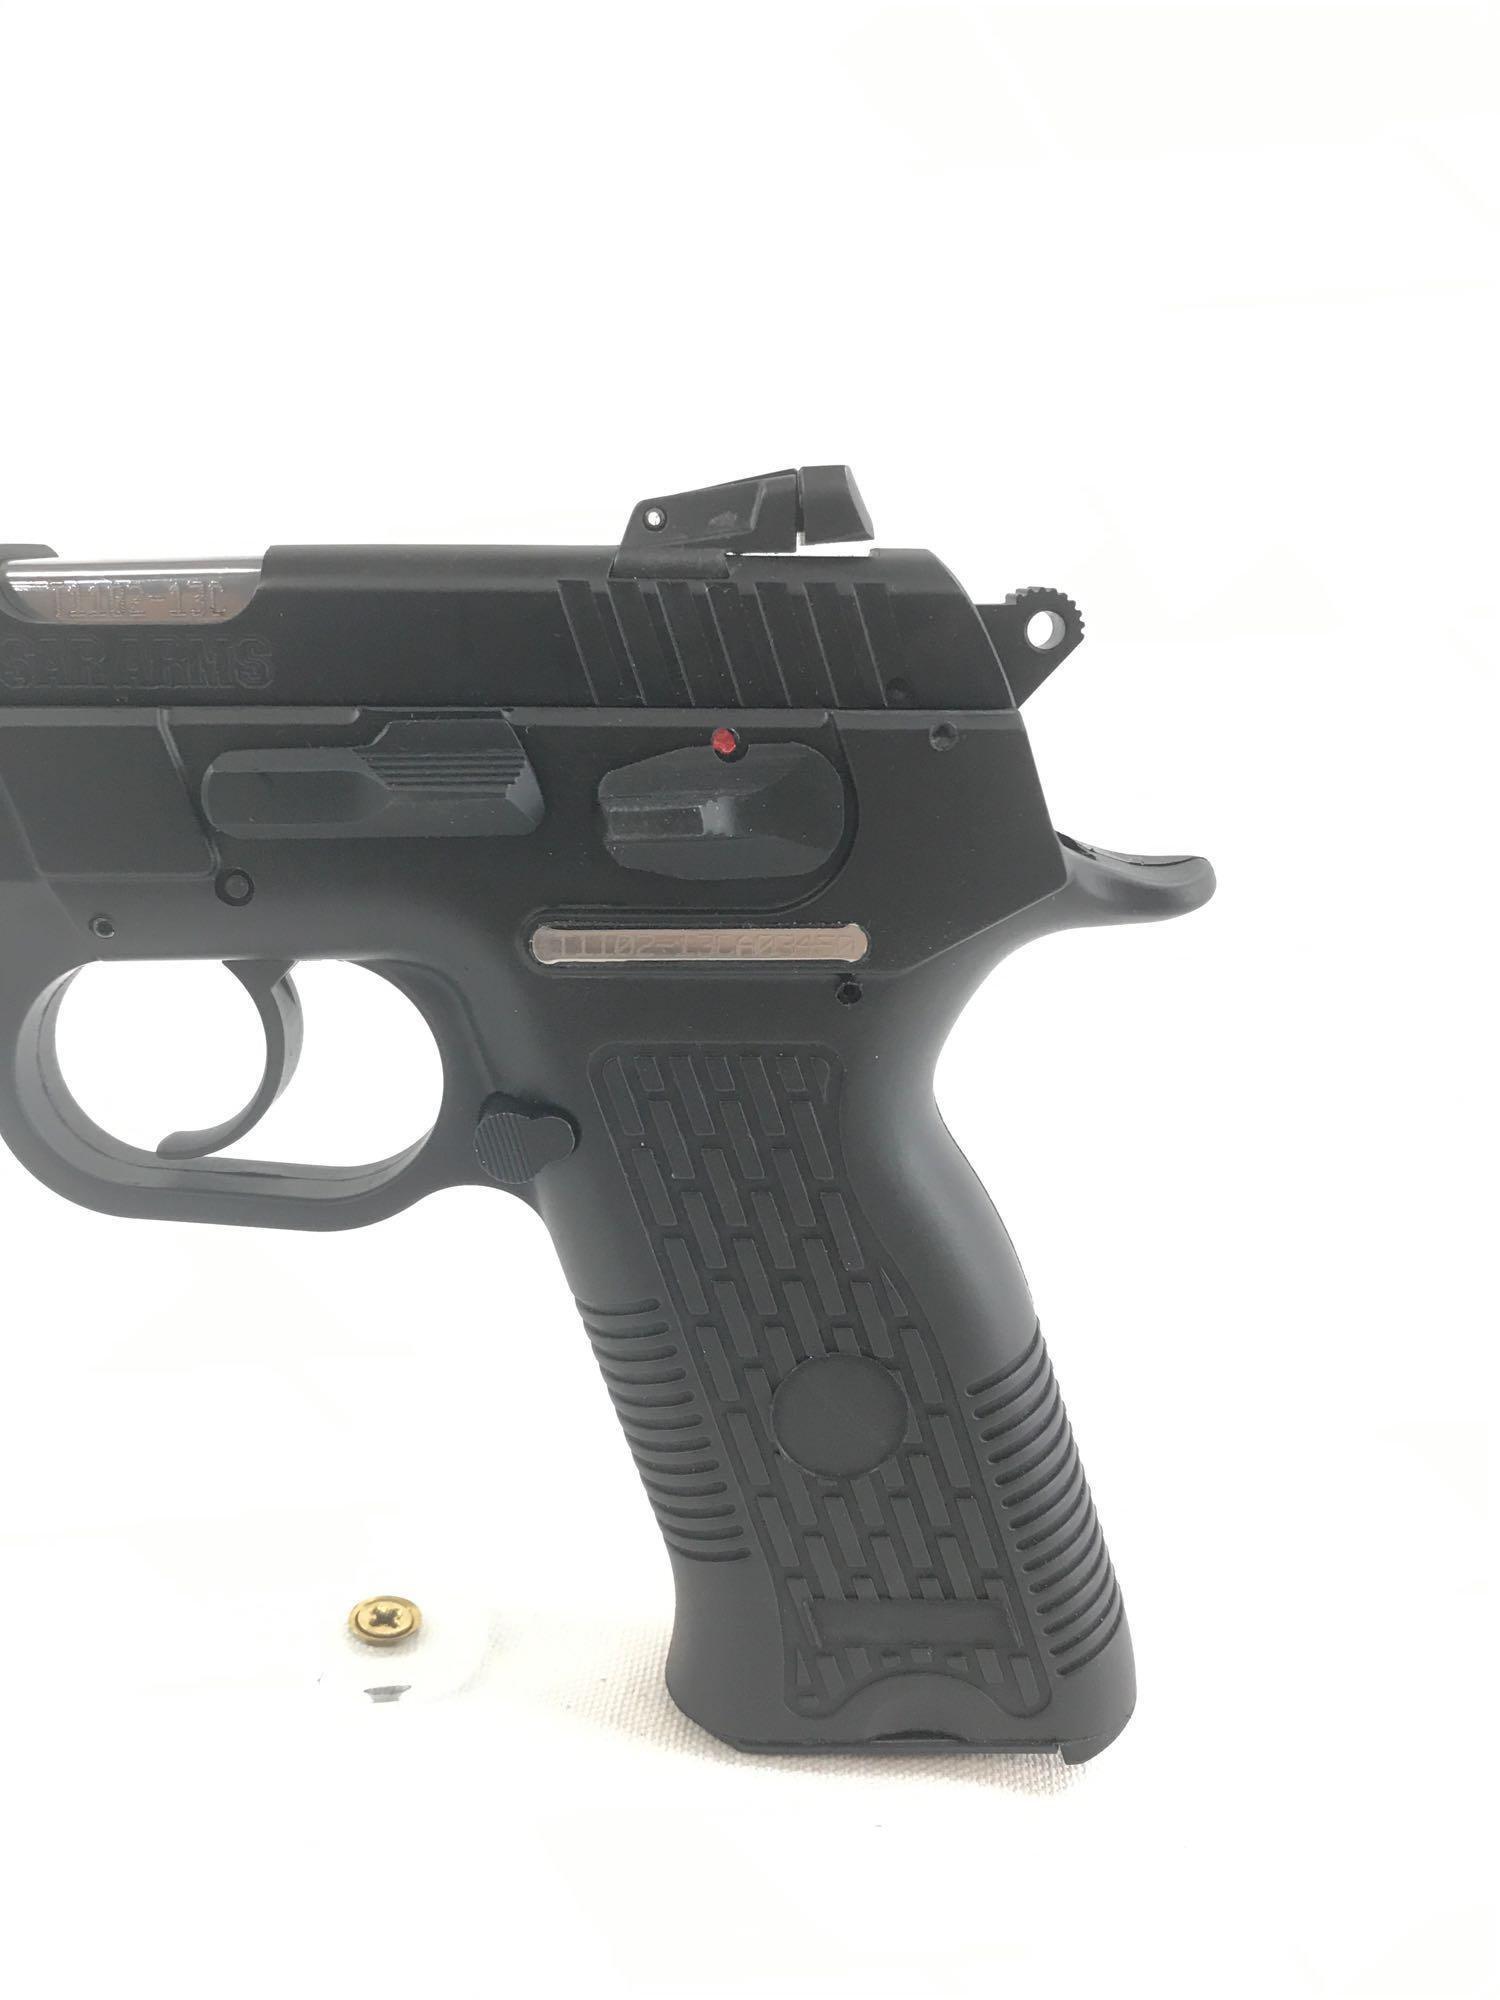 Sar Arms Model Hawk-PP 9x19mm Semi-Auto Pistol with Case